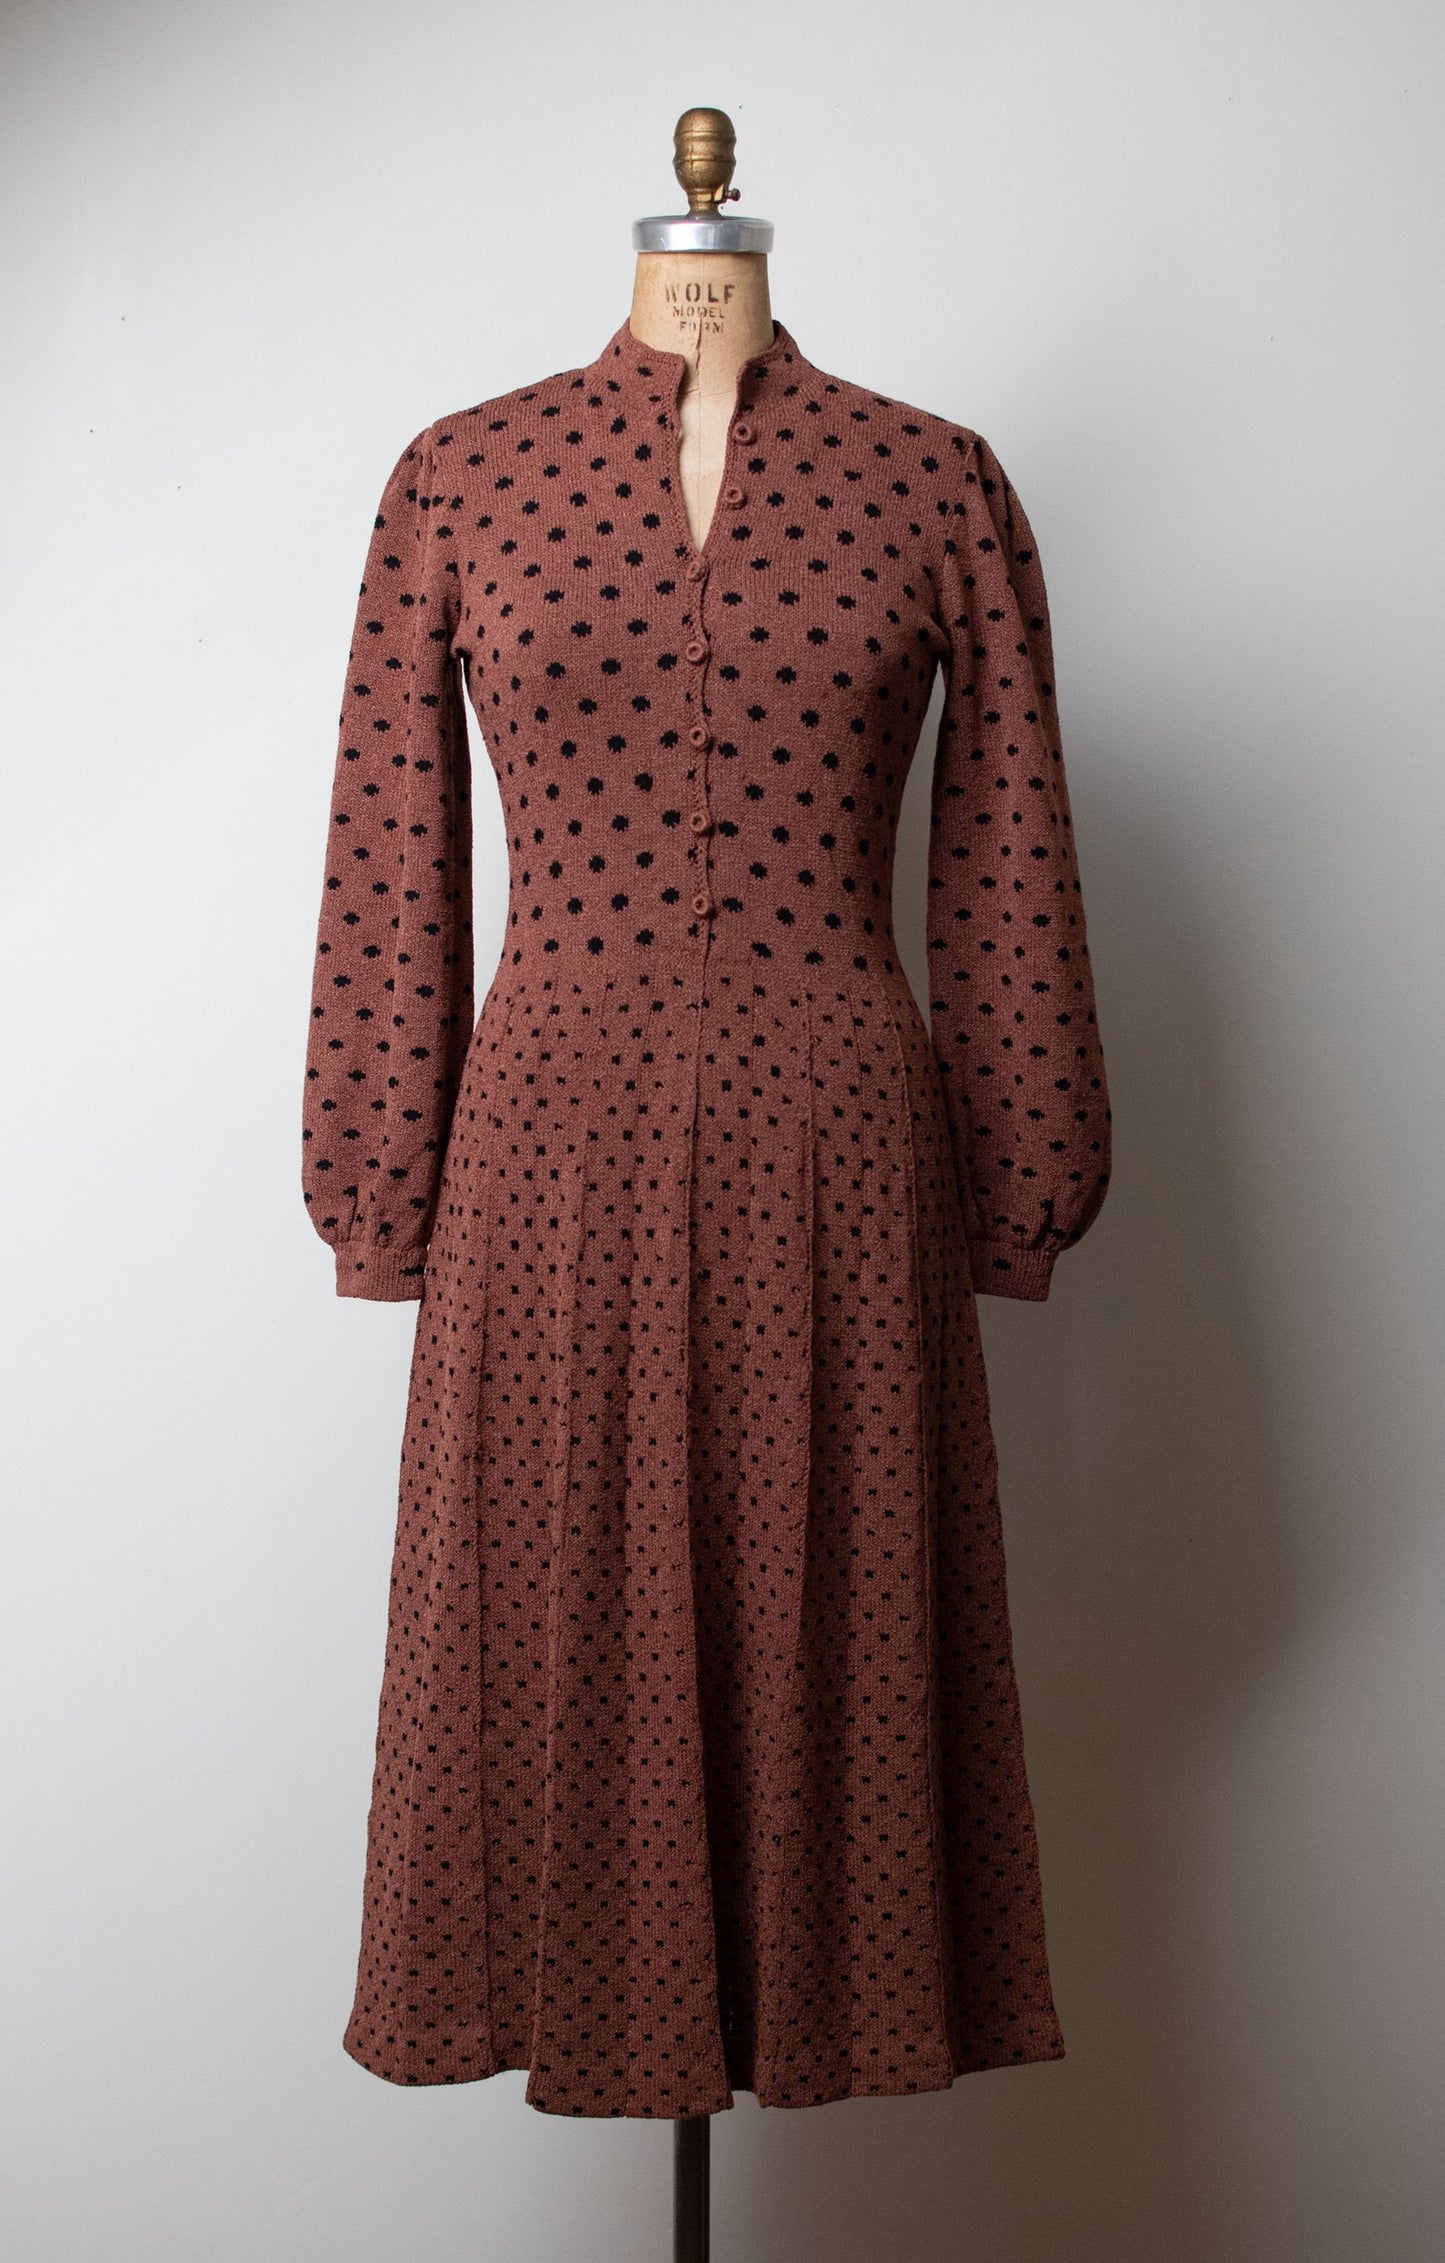 1980s Polka Dot Knit Dress